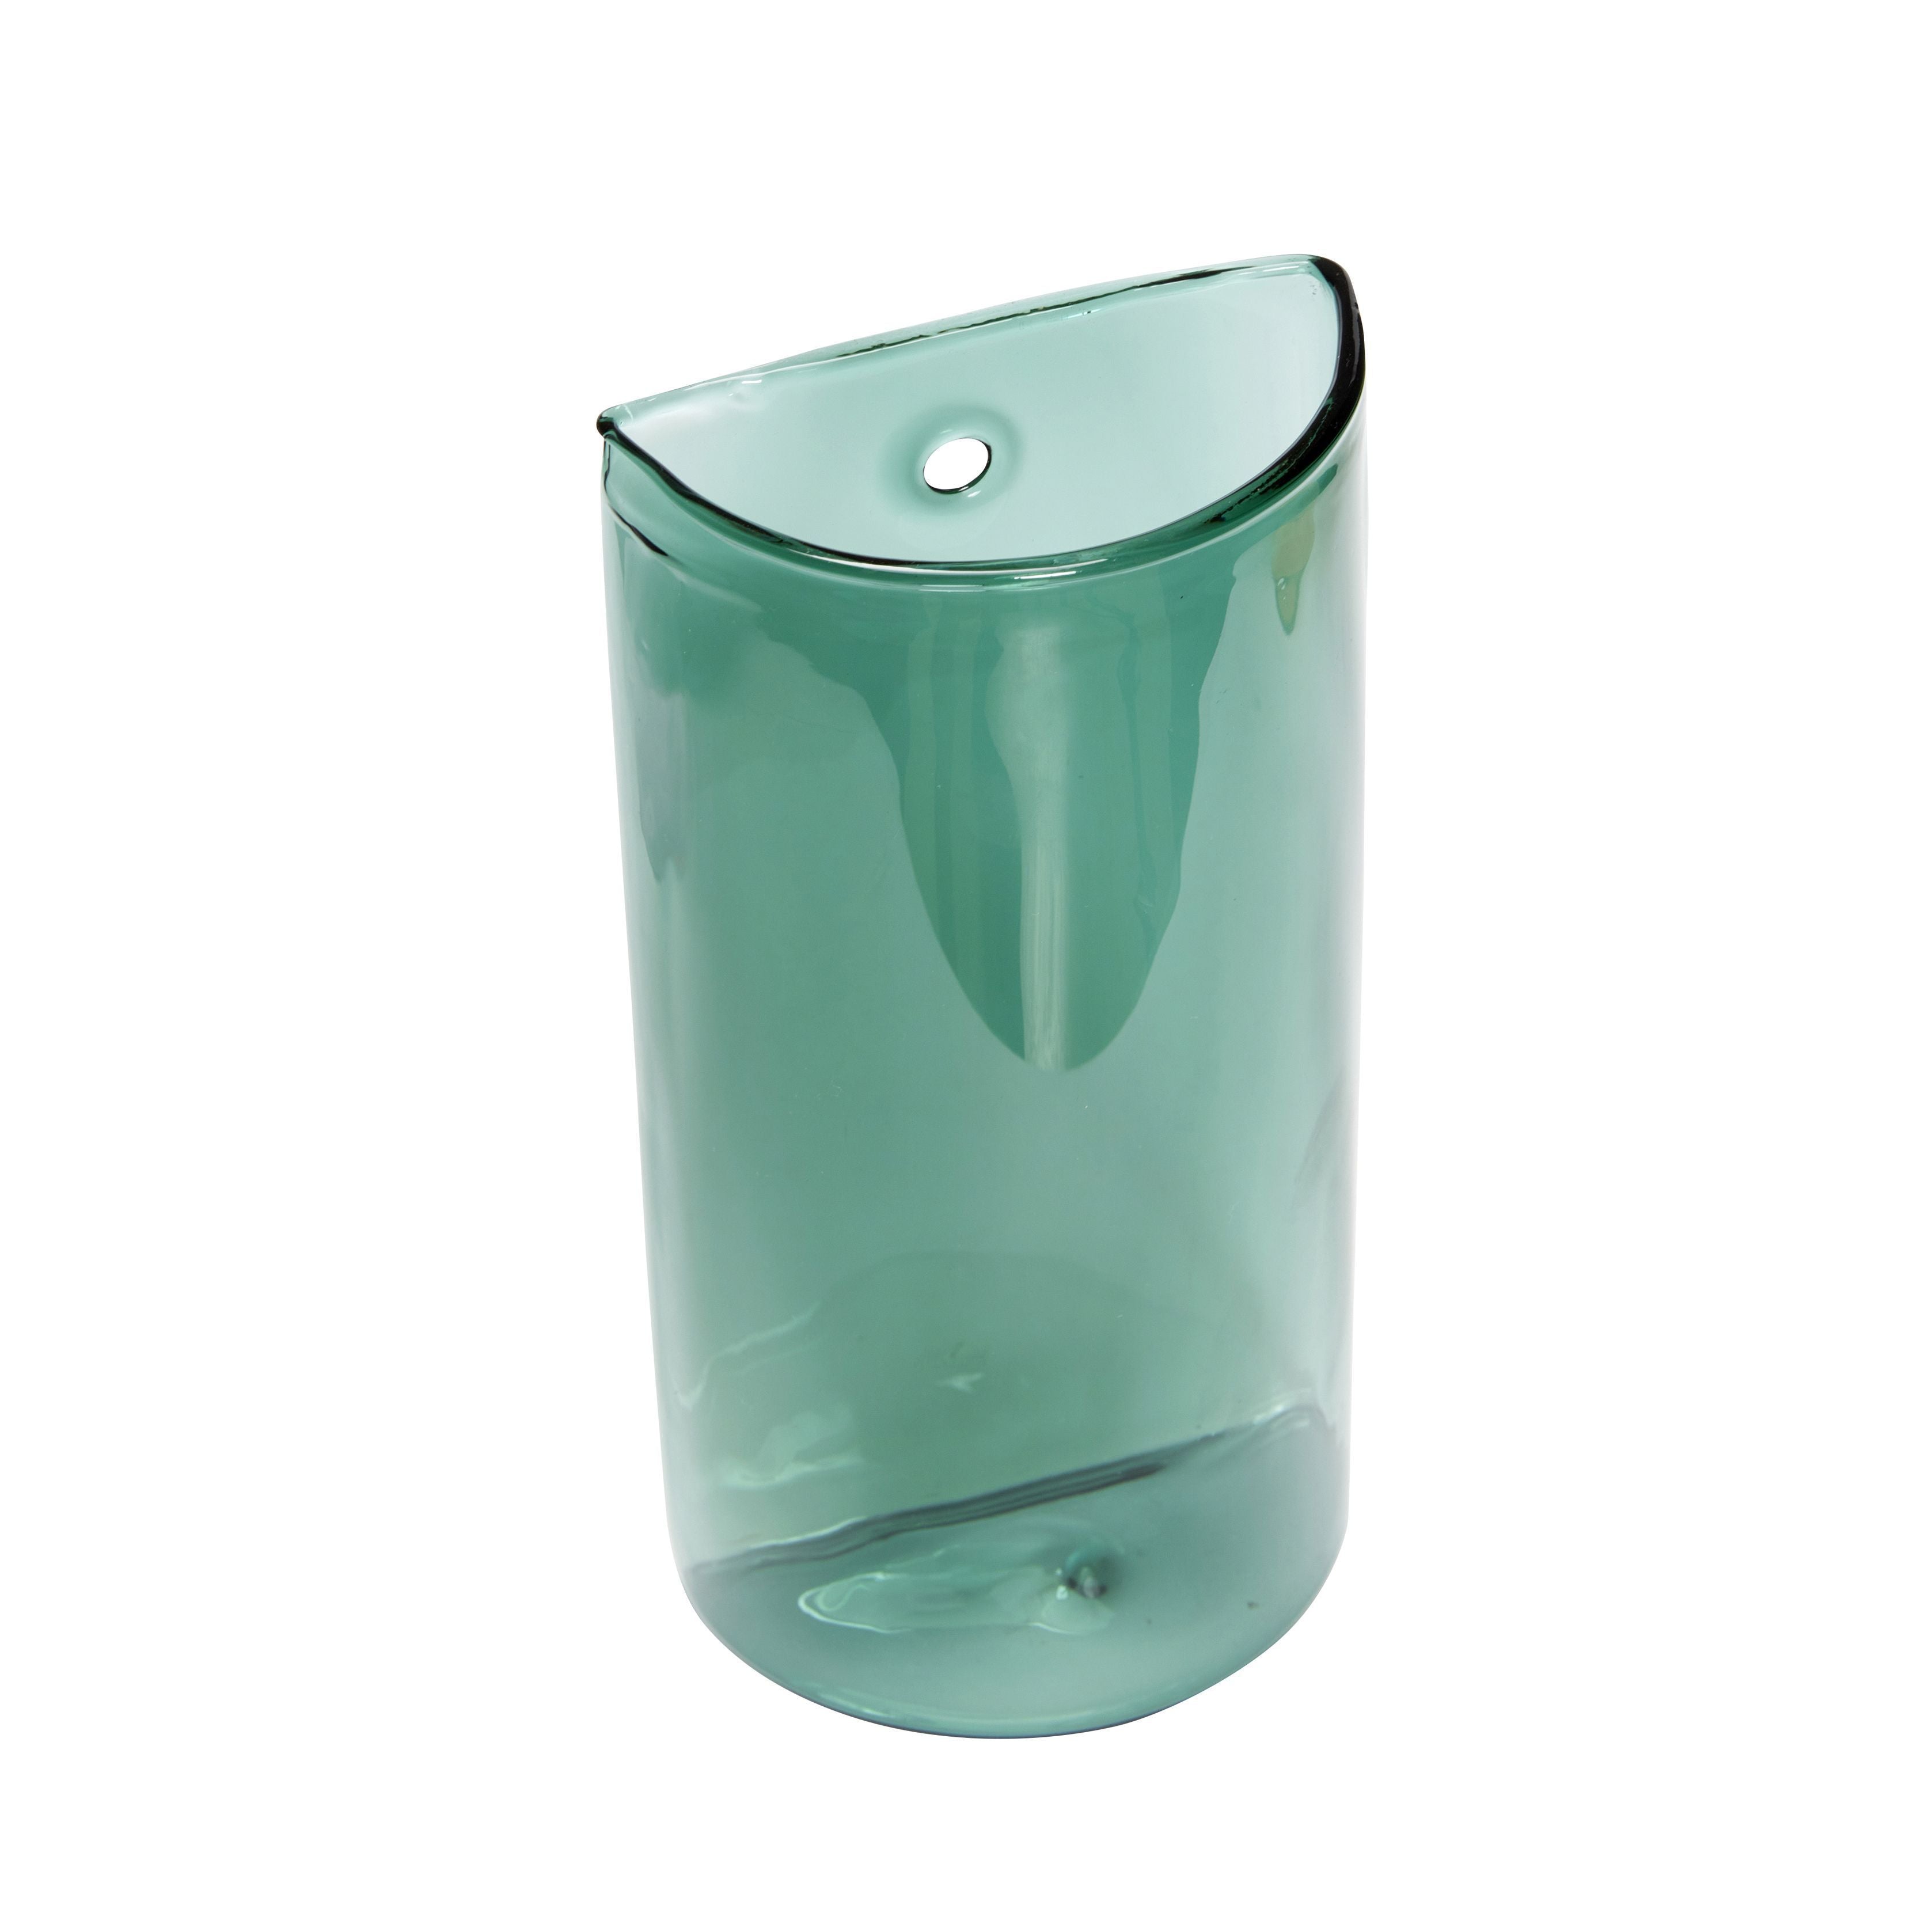 Hübsch Popsicle Vase Glas Lyserød/Gul/Grøn Sæt med 3